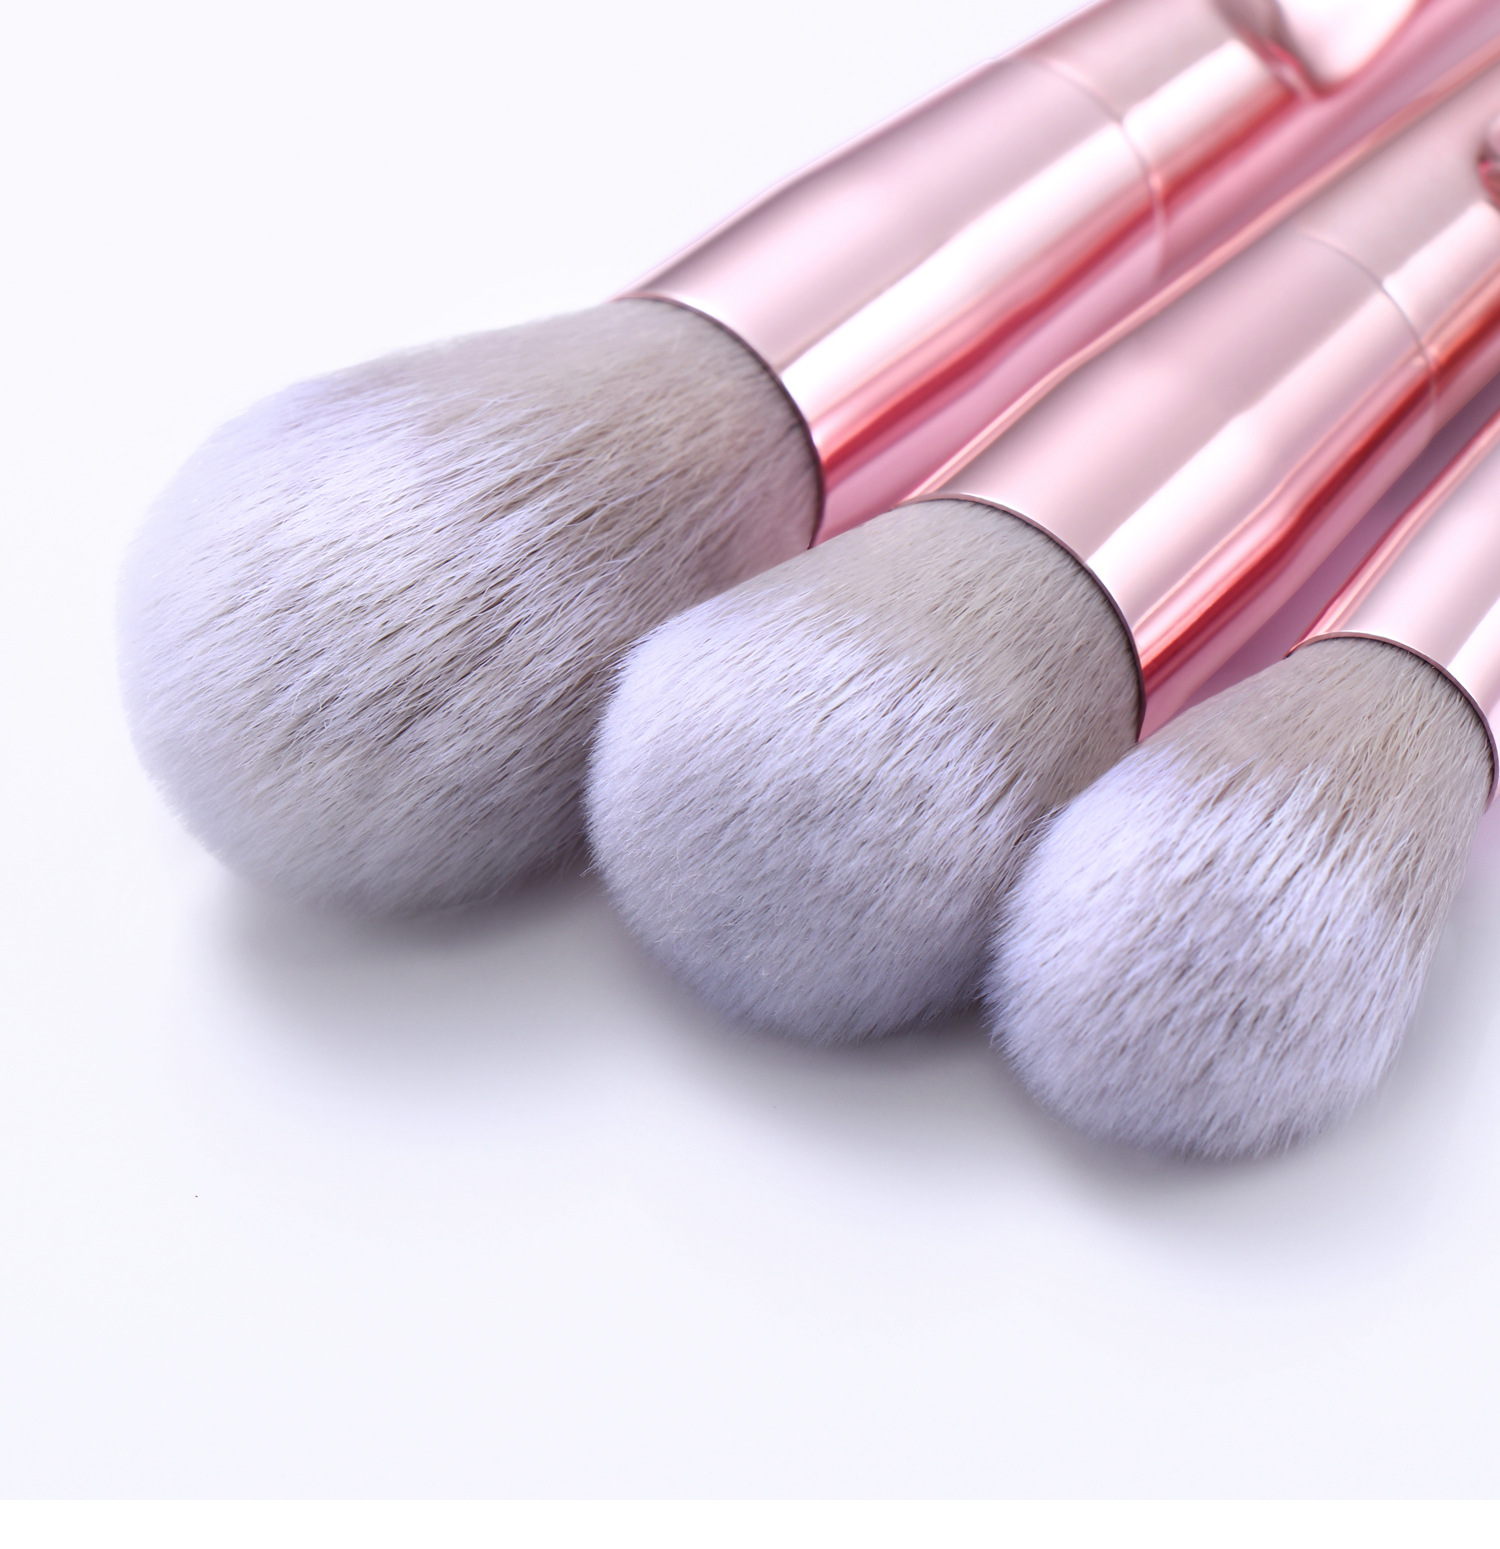 basic makeup brushes